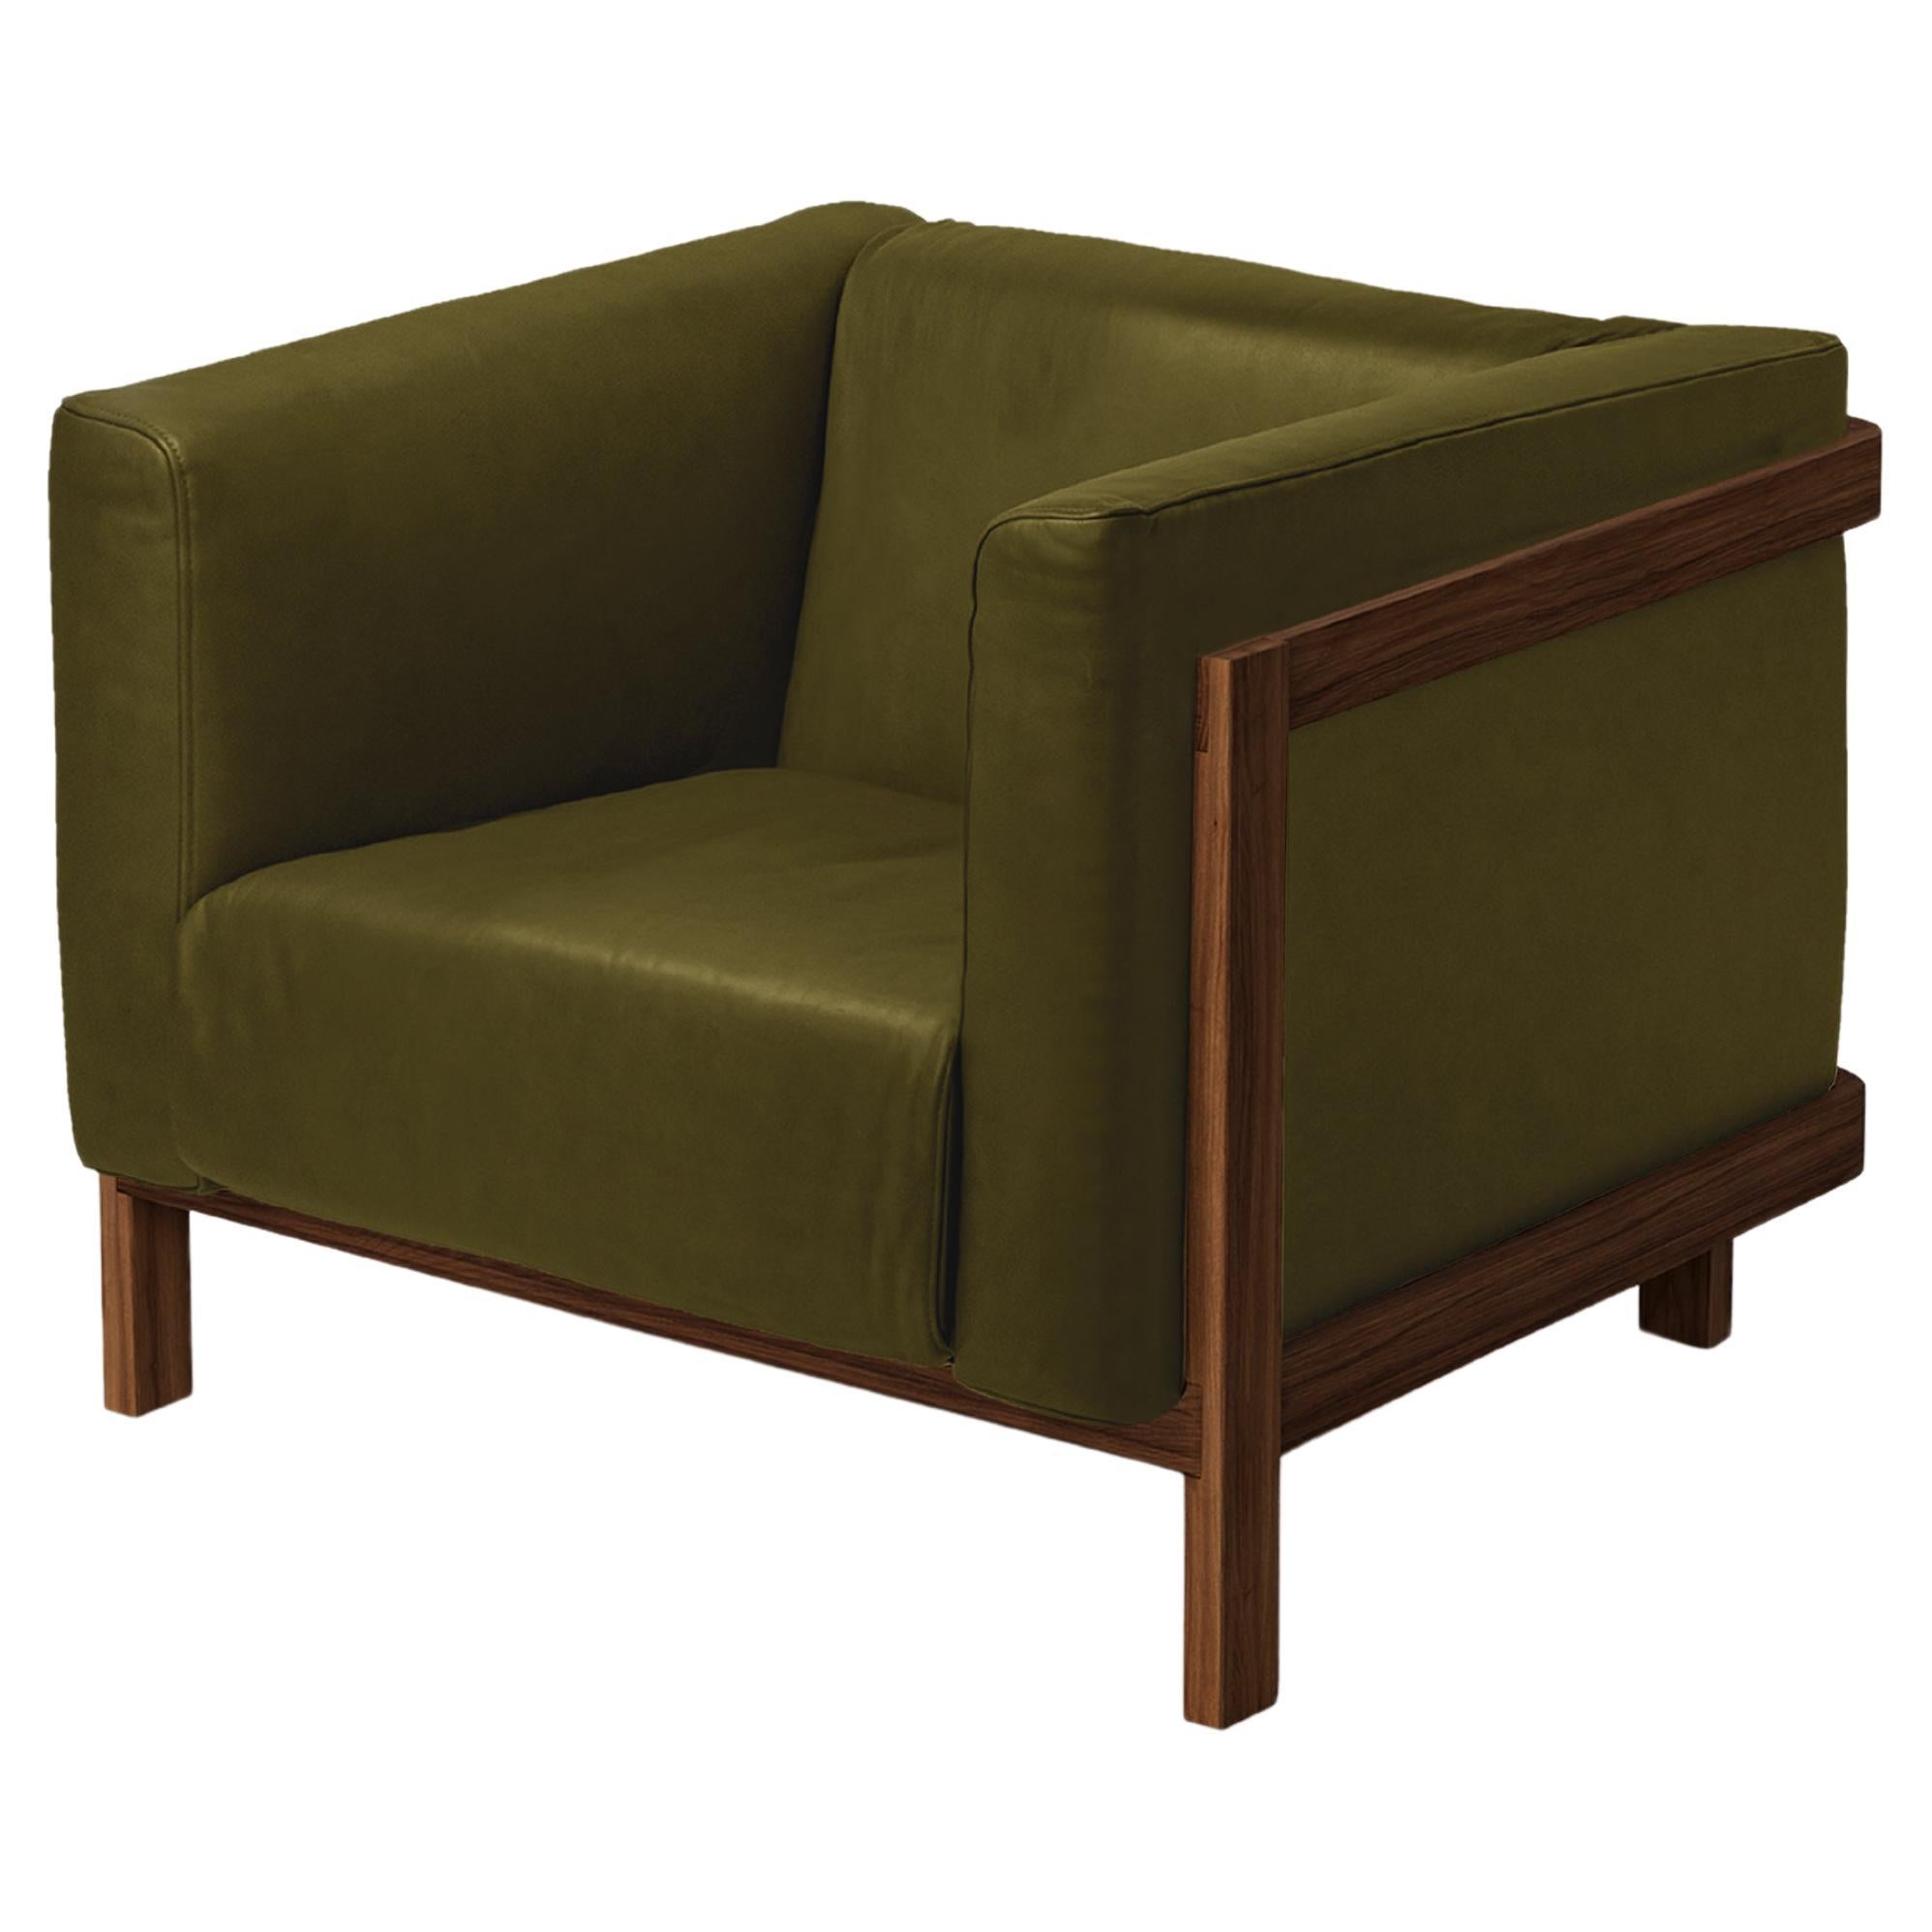 Minimalist one seater sofa walnut - leather upholstered